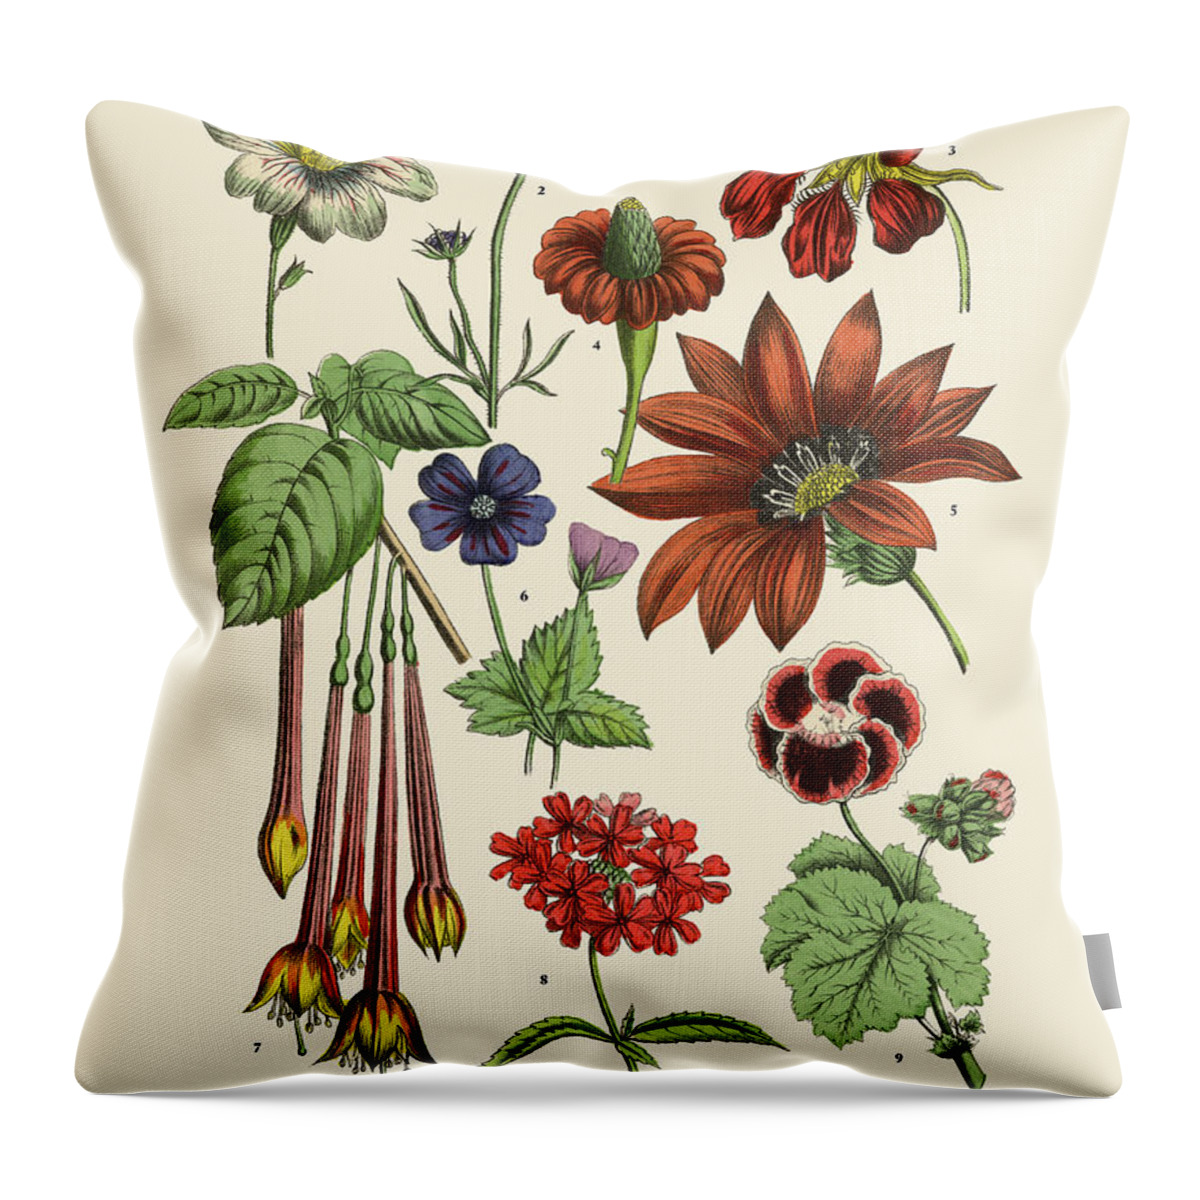 1880-1889 Throw Pillow featuring the digital art Exotic Flowers Of The Garden, Victorian by Bauhaus1000